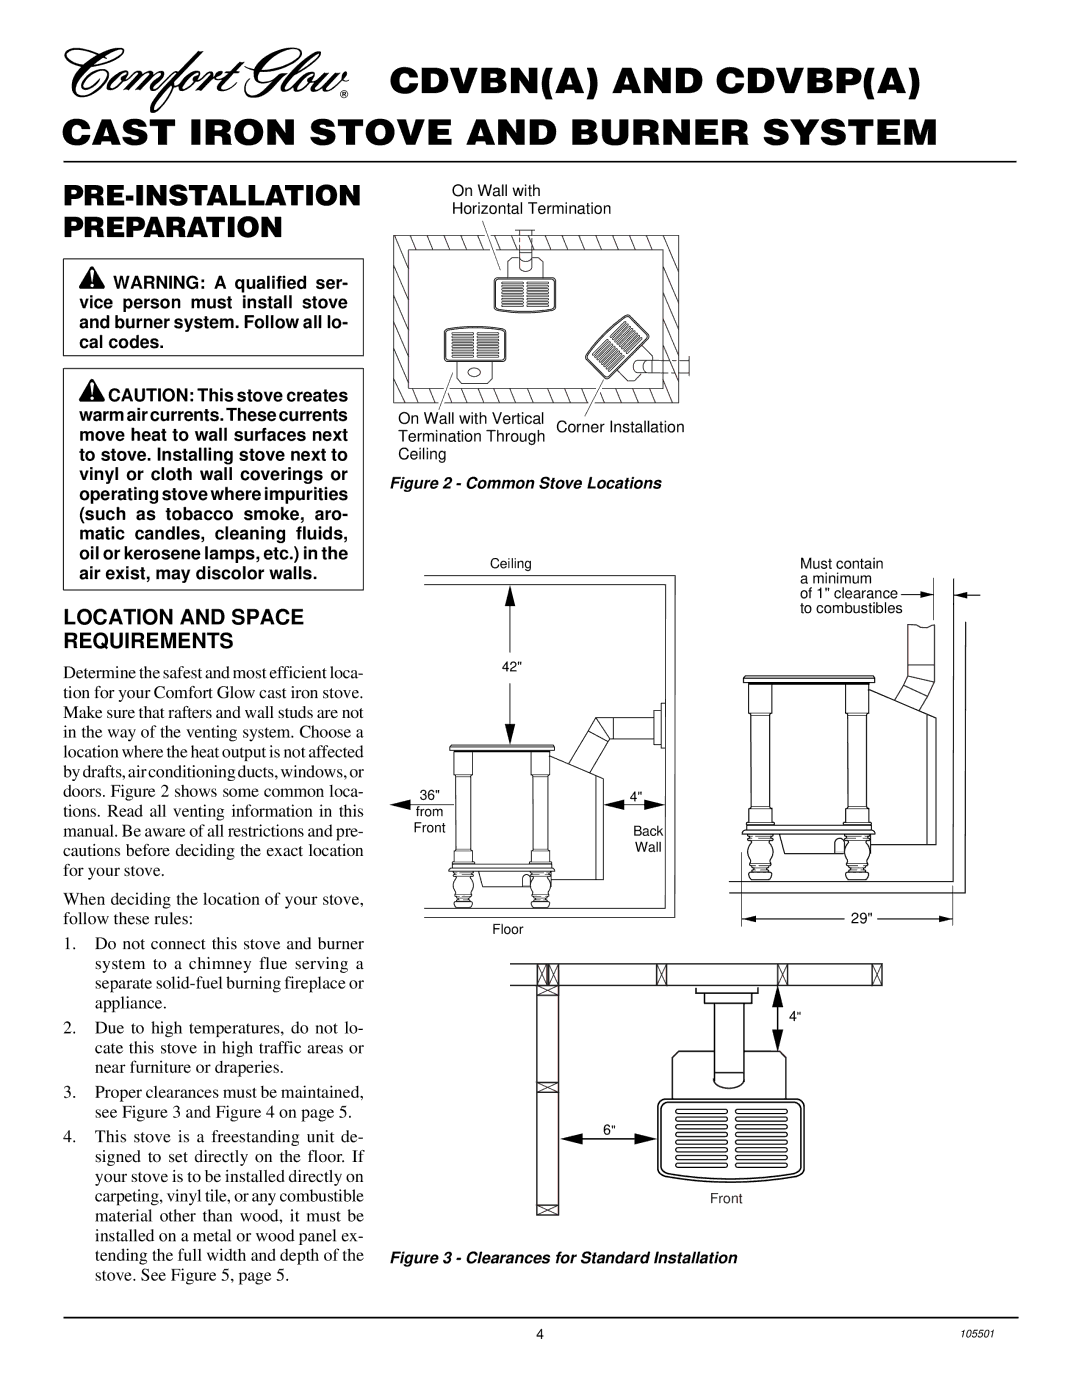 Desa CDVBN(A), CDVBP(A) installation manual PRE-INSTALLATION Preparation, Location and Space Requirements 